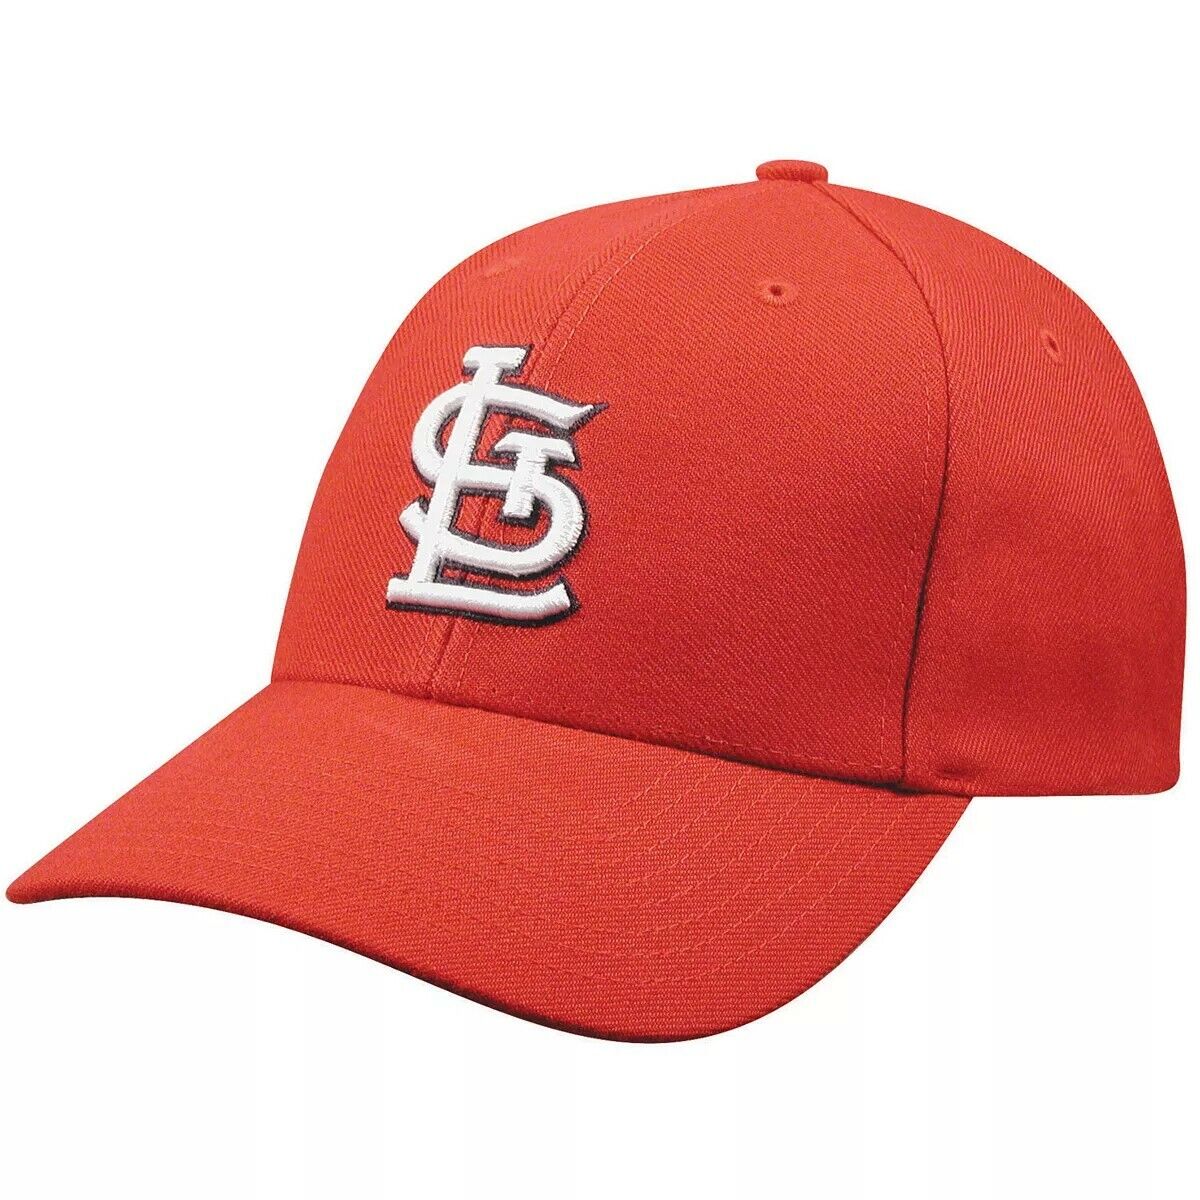 St. Louis Cardinals '47 Brand Wool Replica Baseball Cap - Red